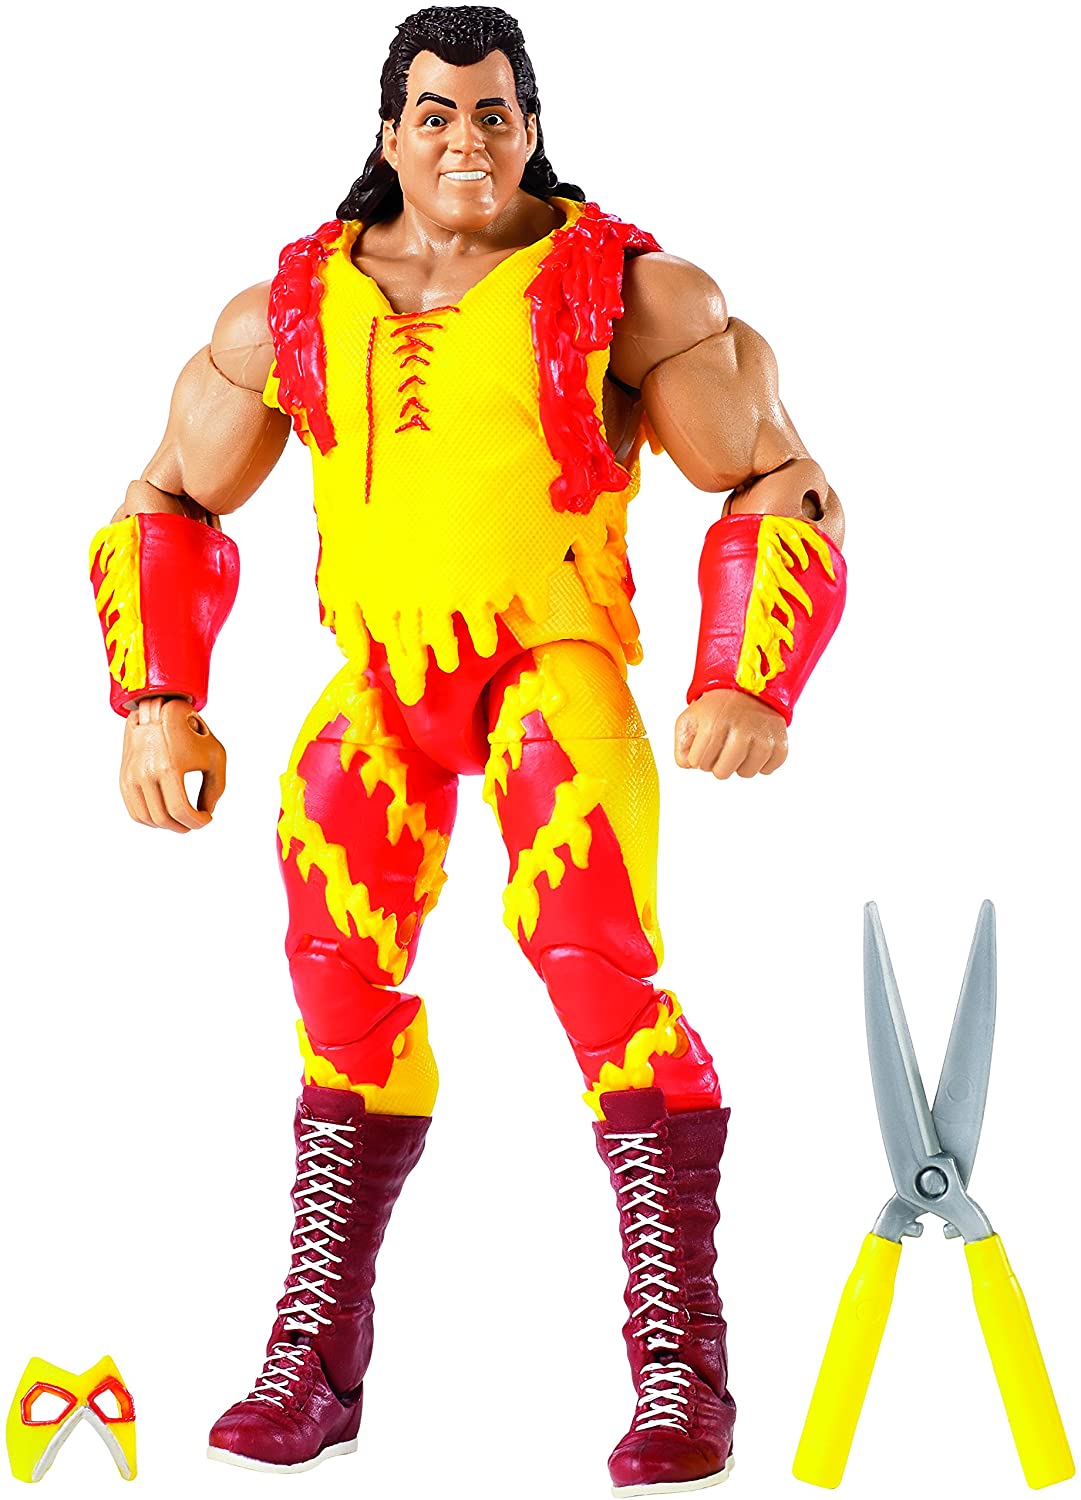 2018 WWE Mattel Elite Collection WrestleMania 34 Brutus "The Barber" Beefcake